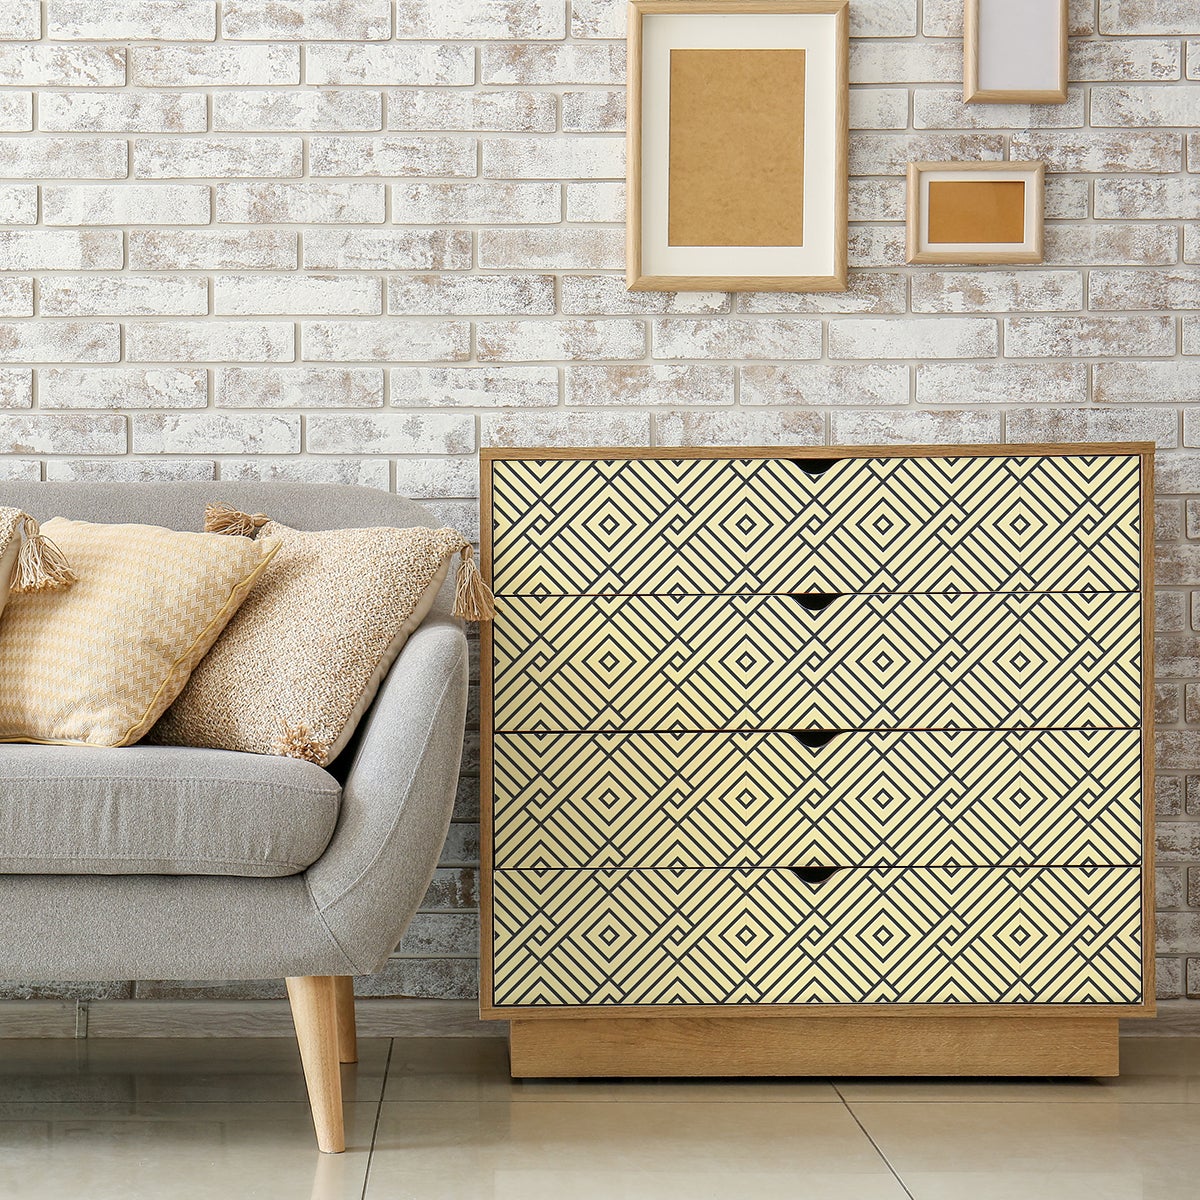 Vinilo escandinavo para muebles jenvak - adhesivo de pared - revestimiento  sticker mural decorativo - 60x90cm